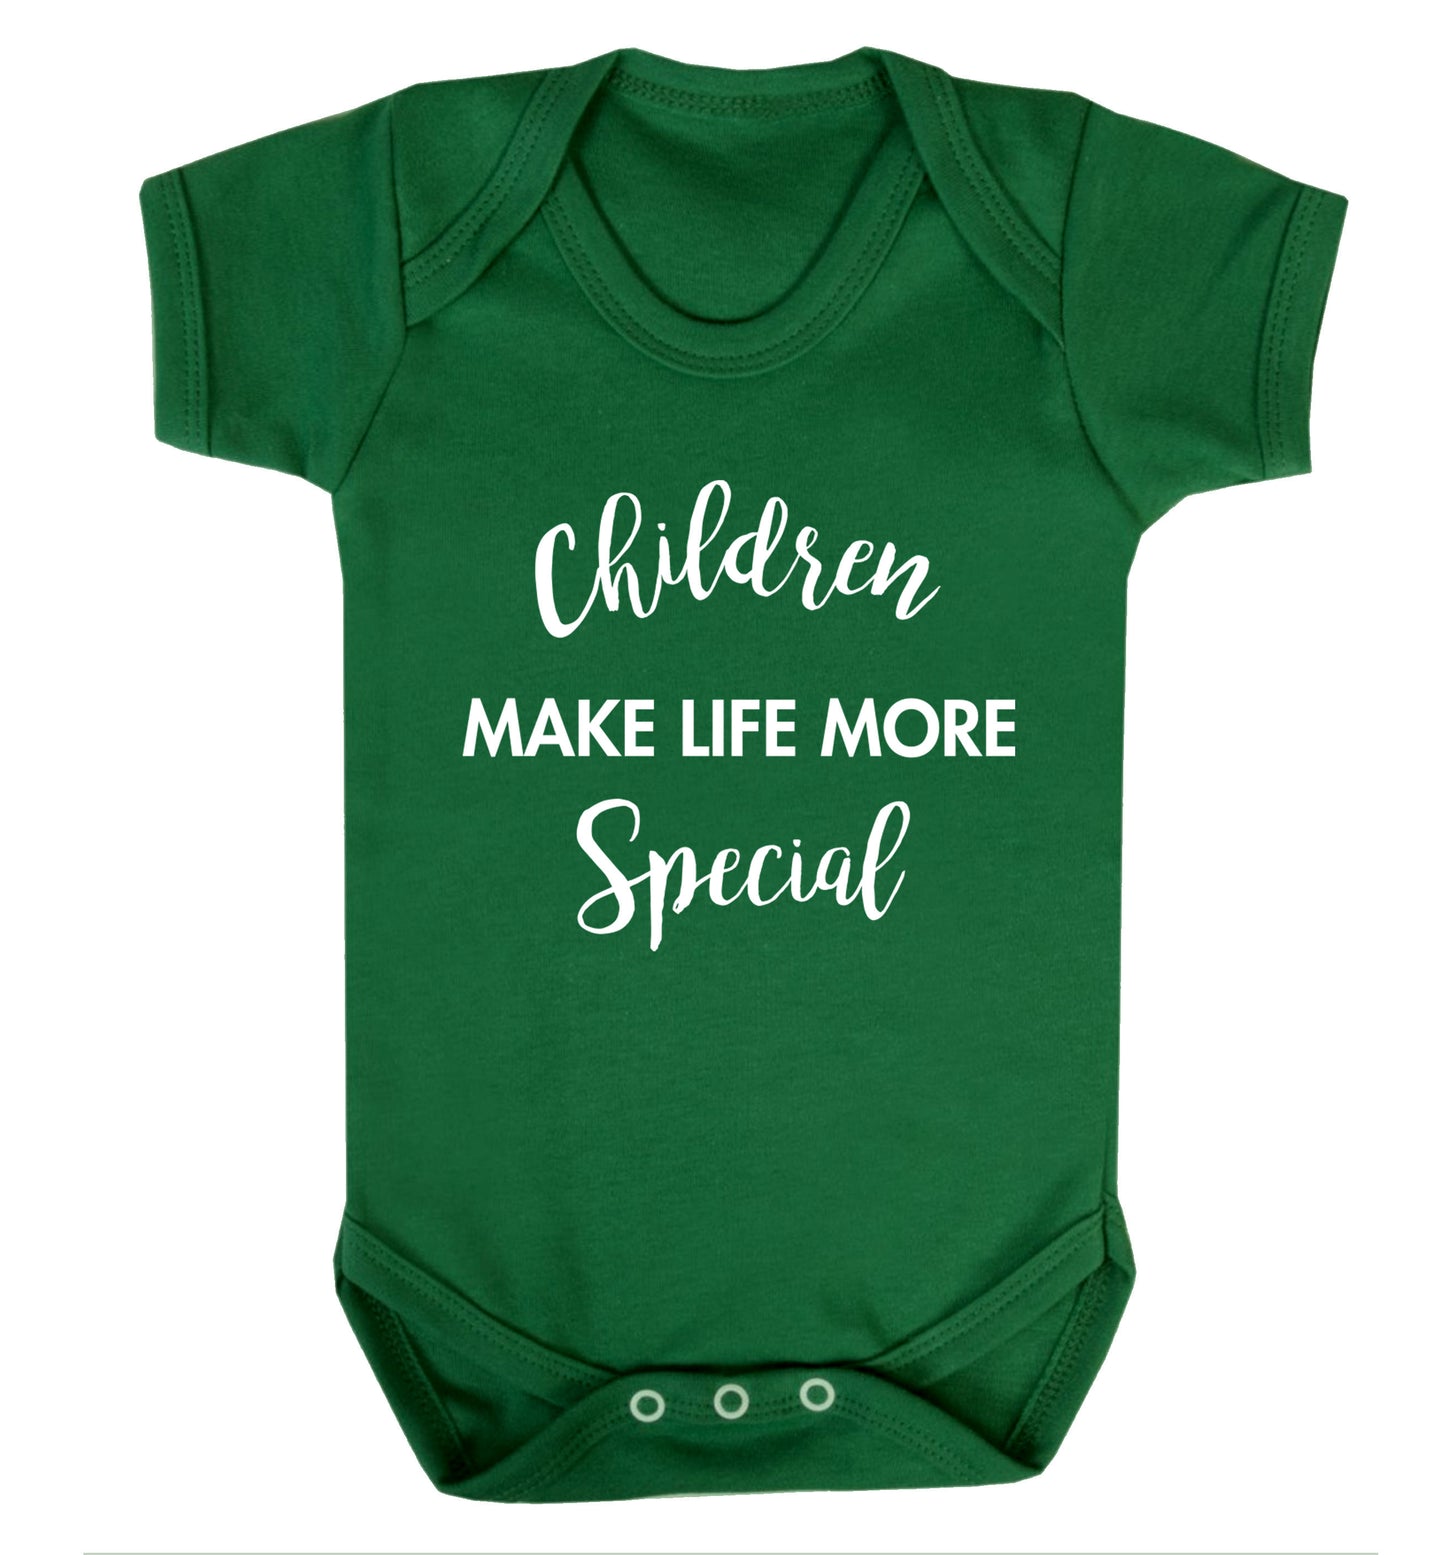 Children make life more special Baby Vest green 18-24 months